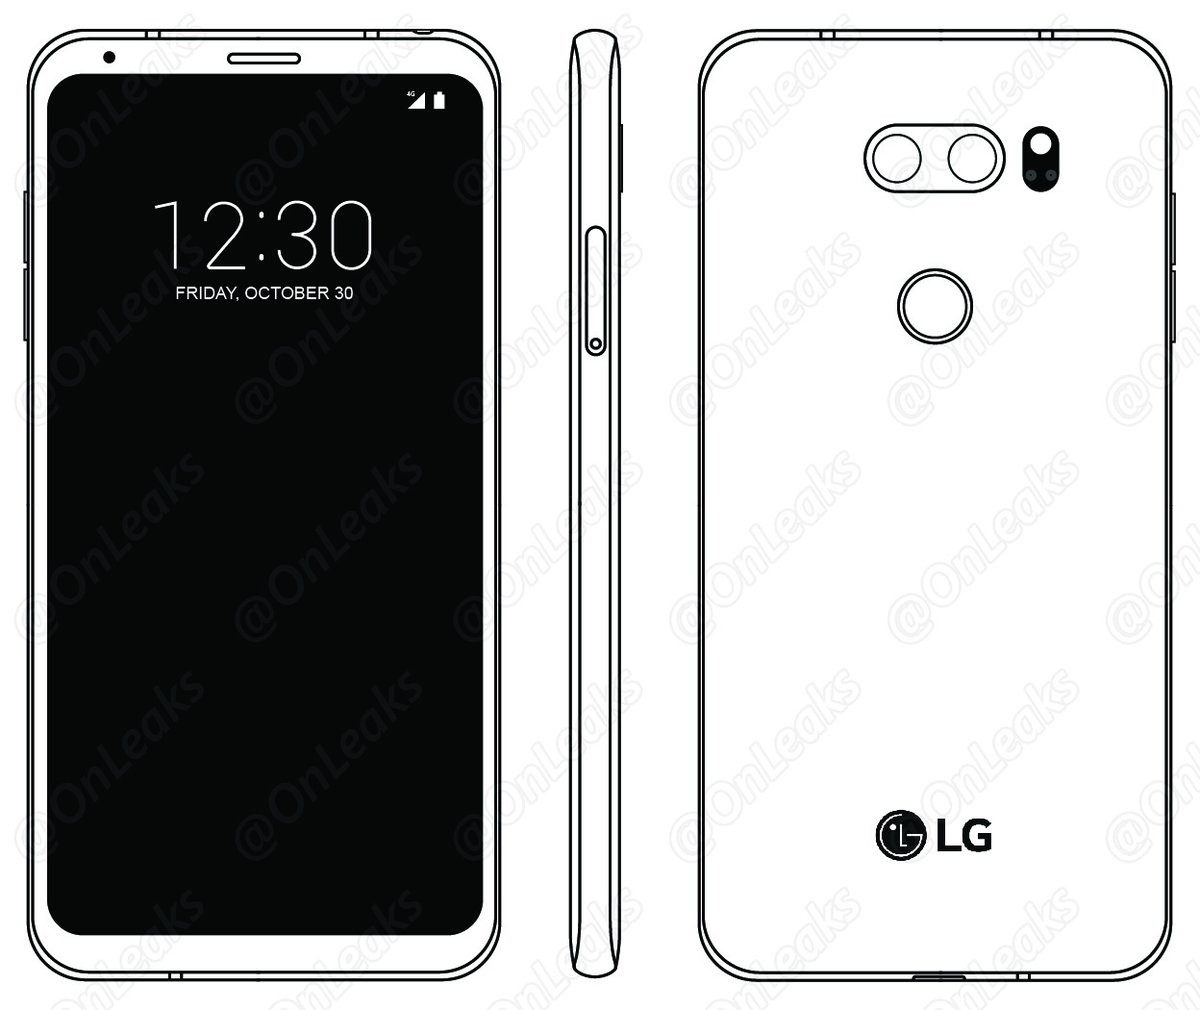 LG V30 leaked schematics confirm the final design 2